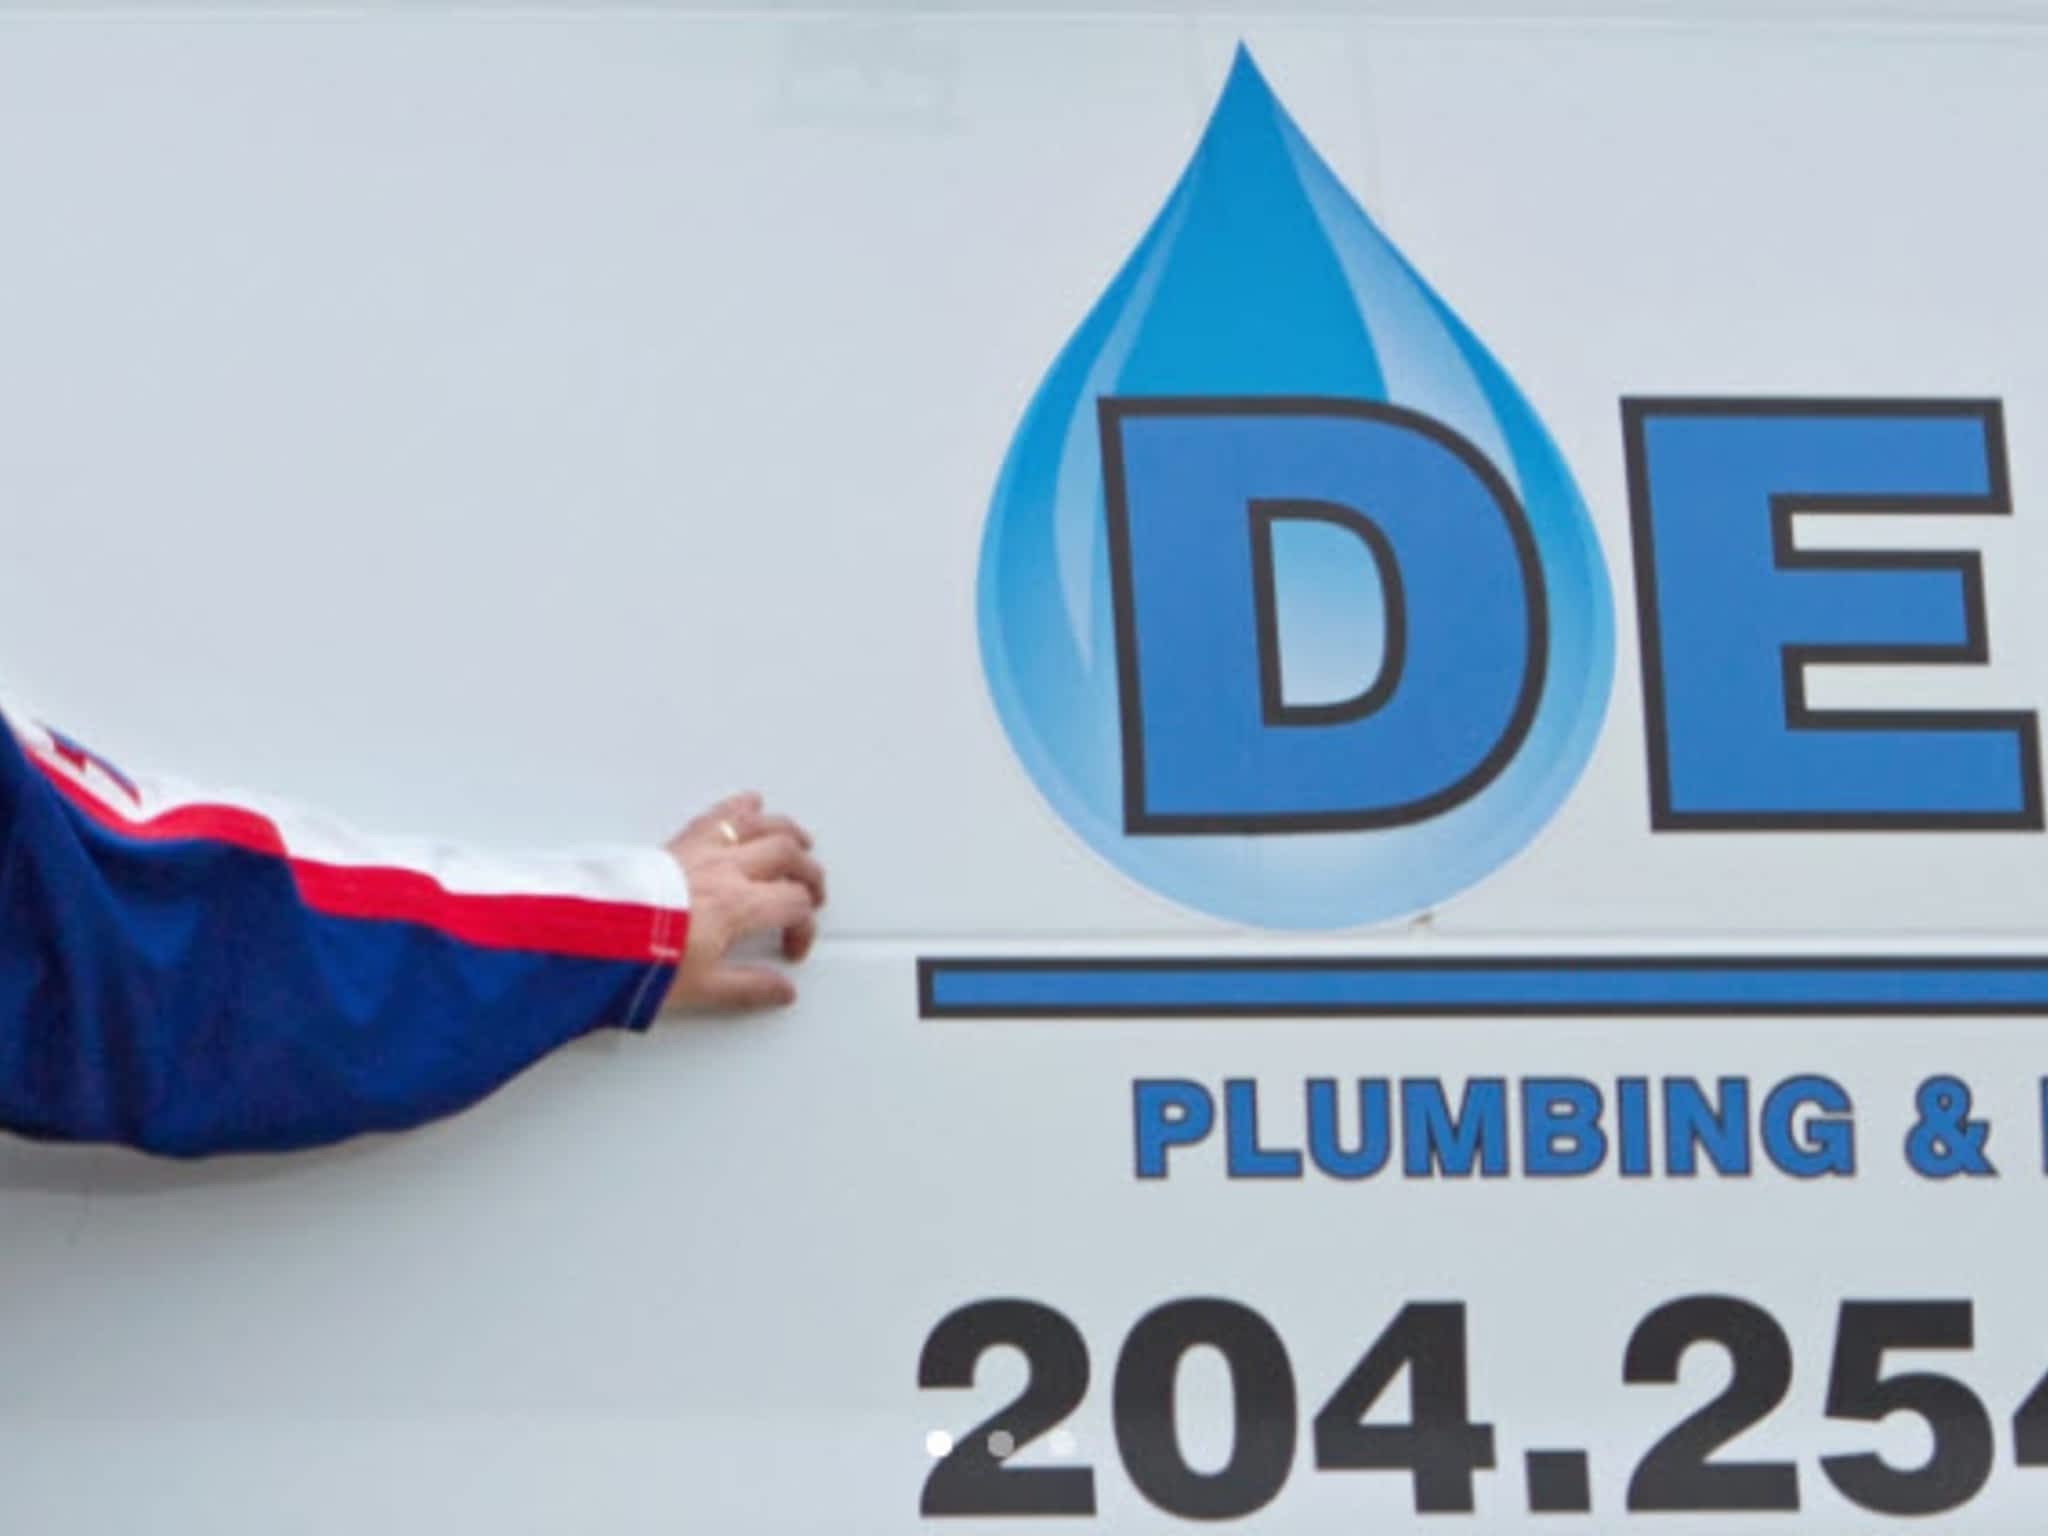 photo Dell Plumbing & Heating Inc